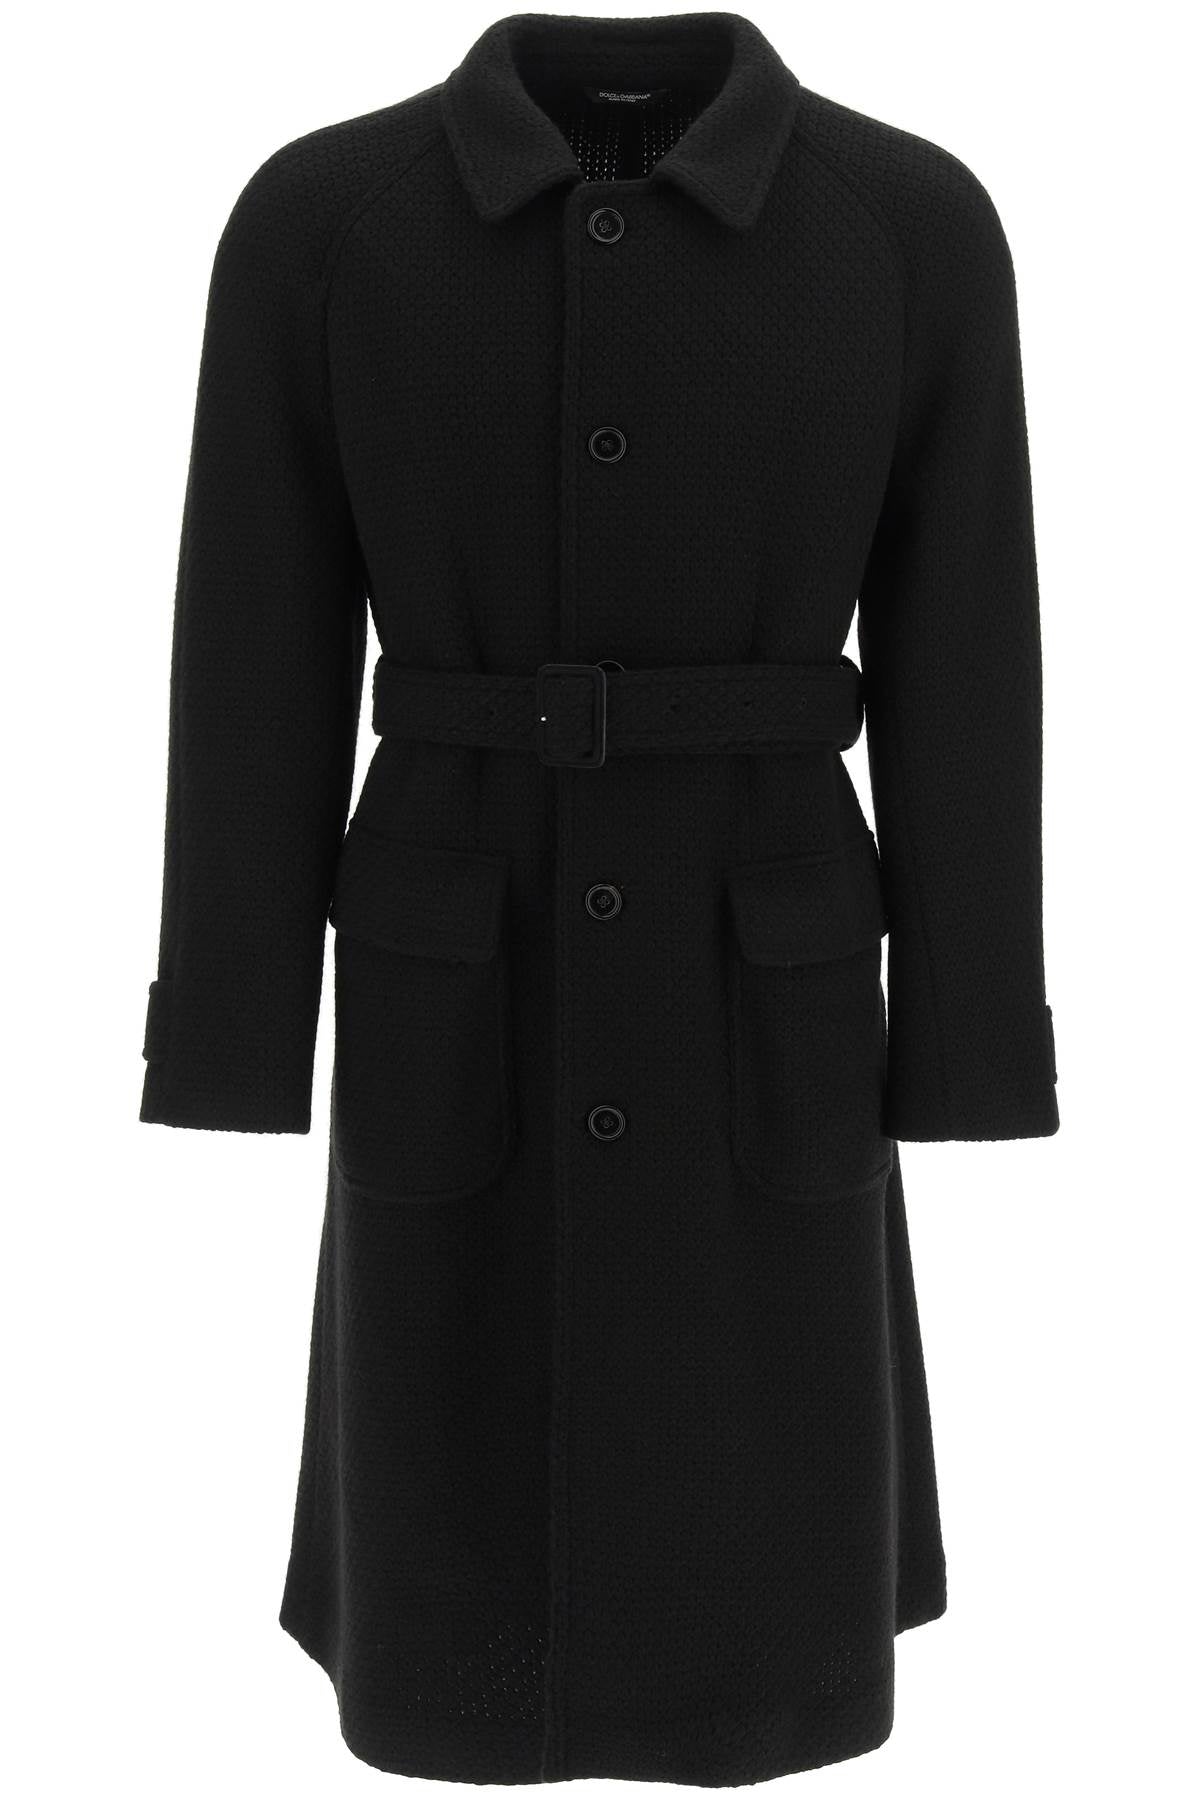 Dolce & Gabbana Tailored Wool Blend Knit Coat   Black